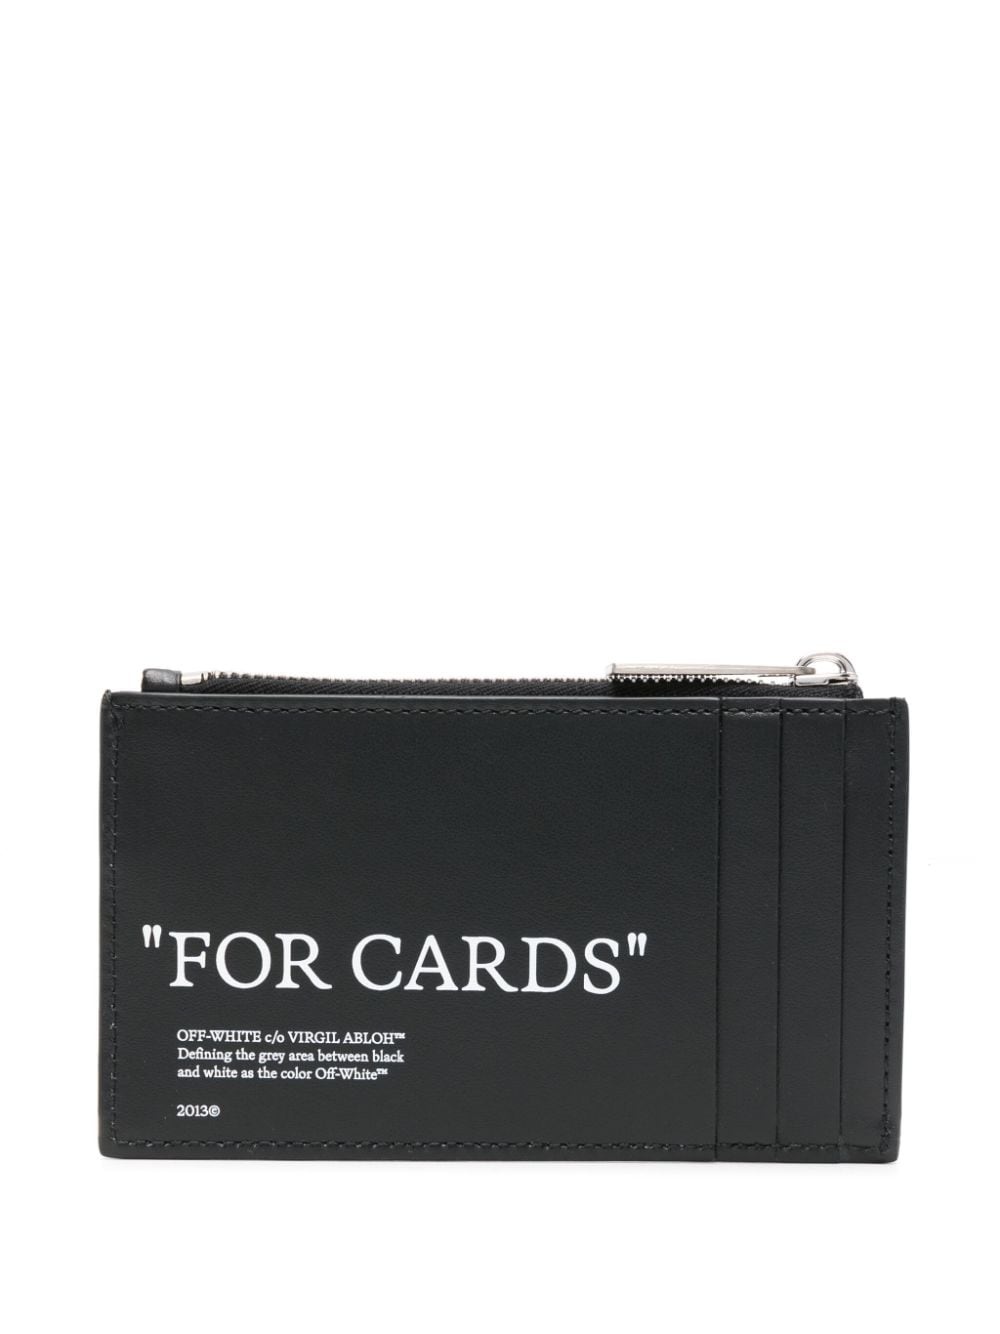 For Cards leather cardholder - 2